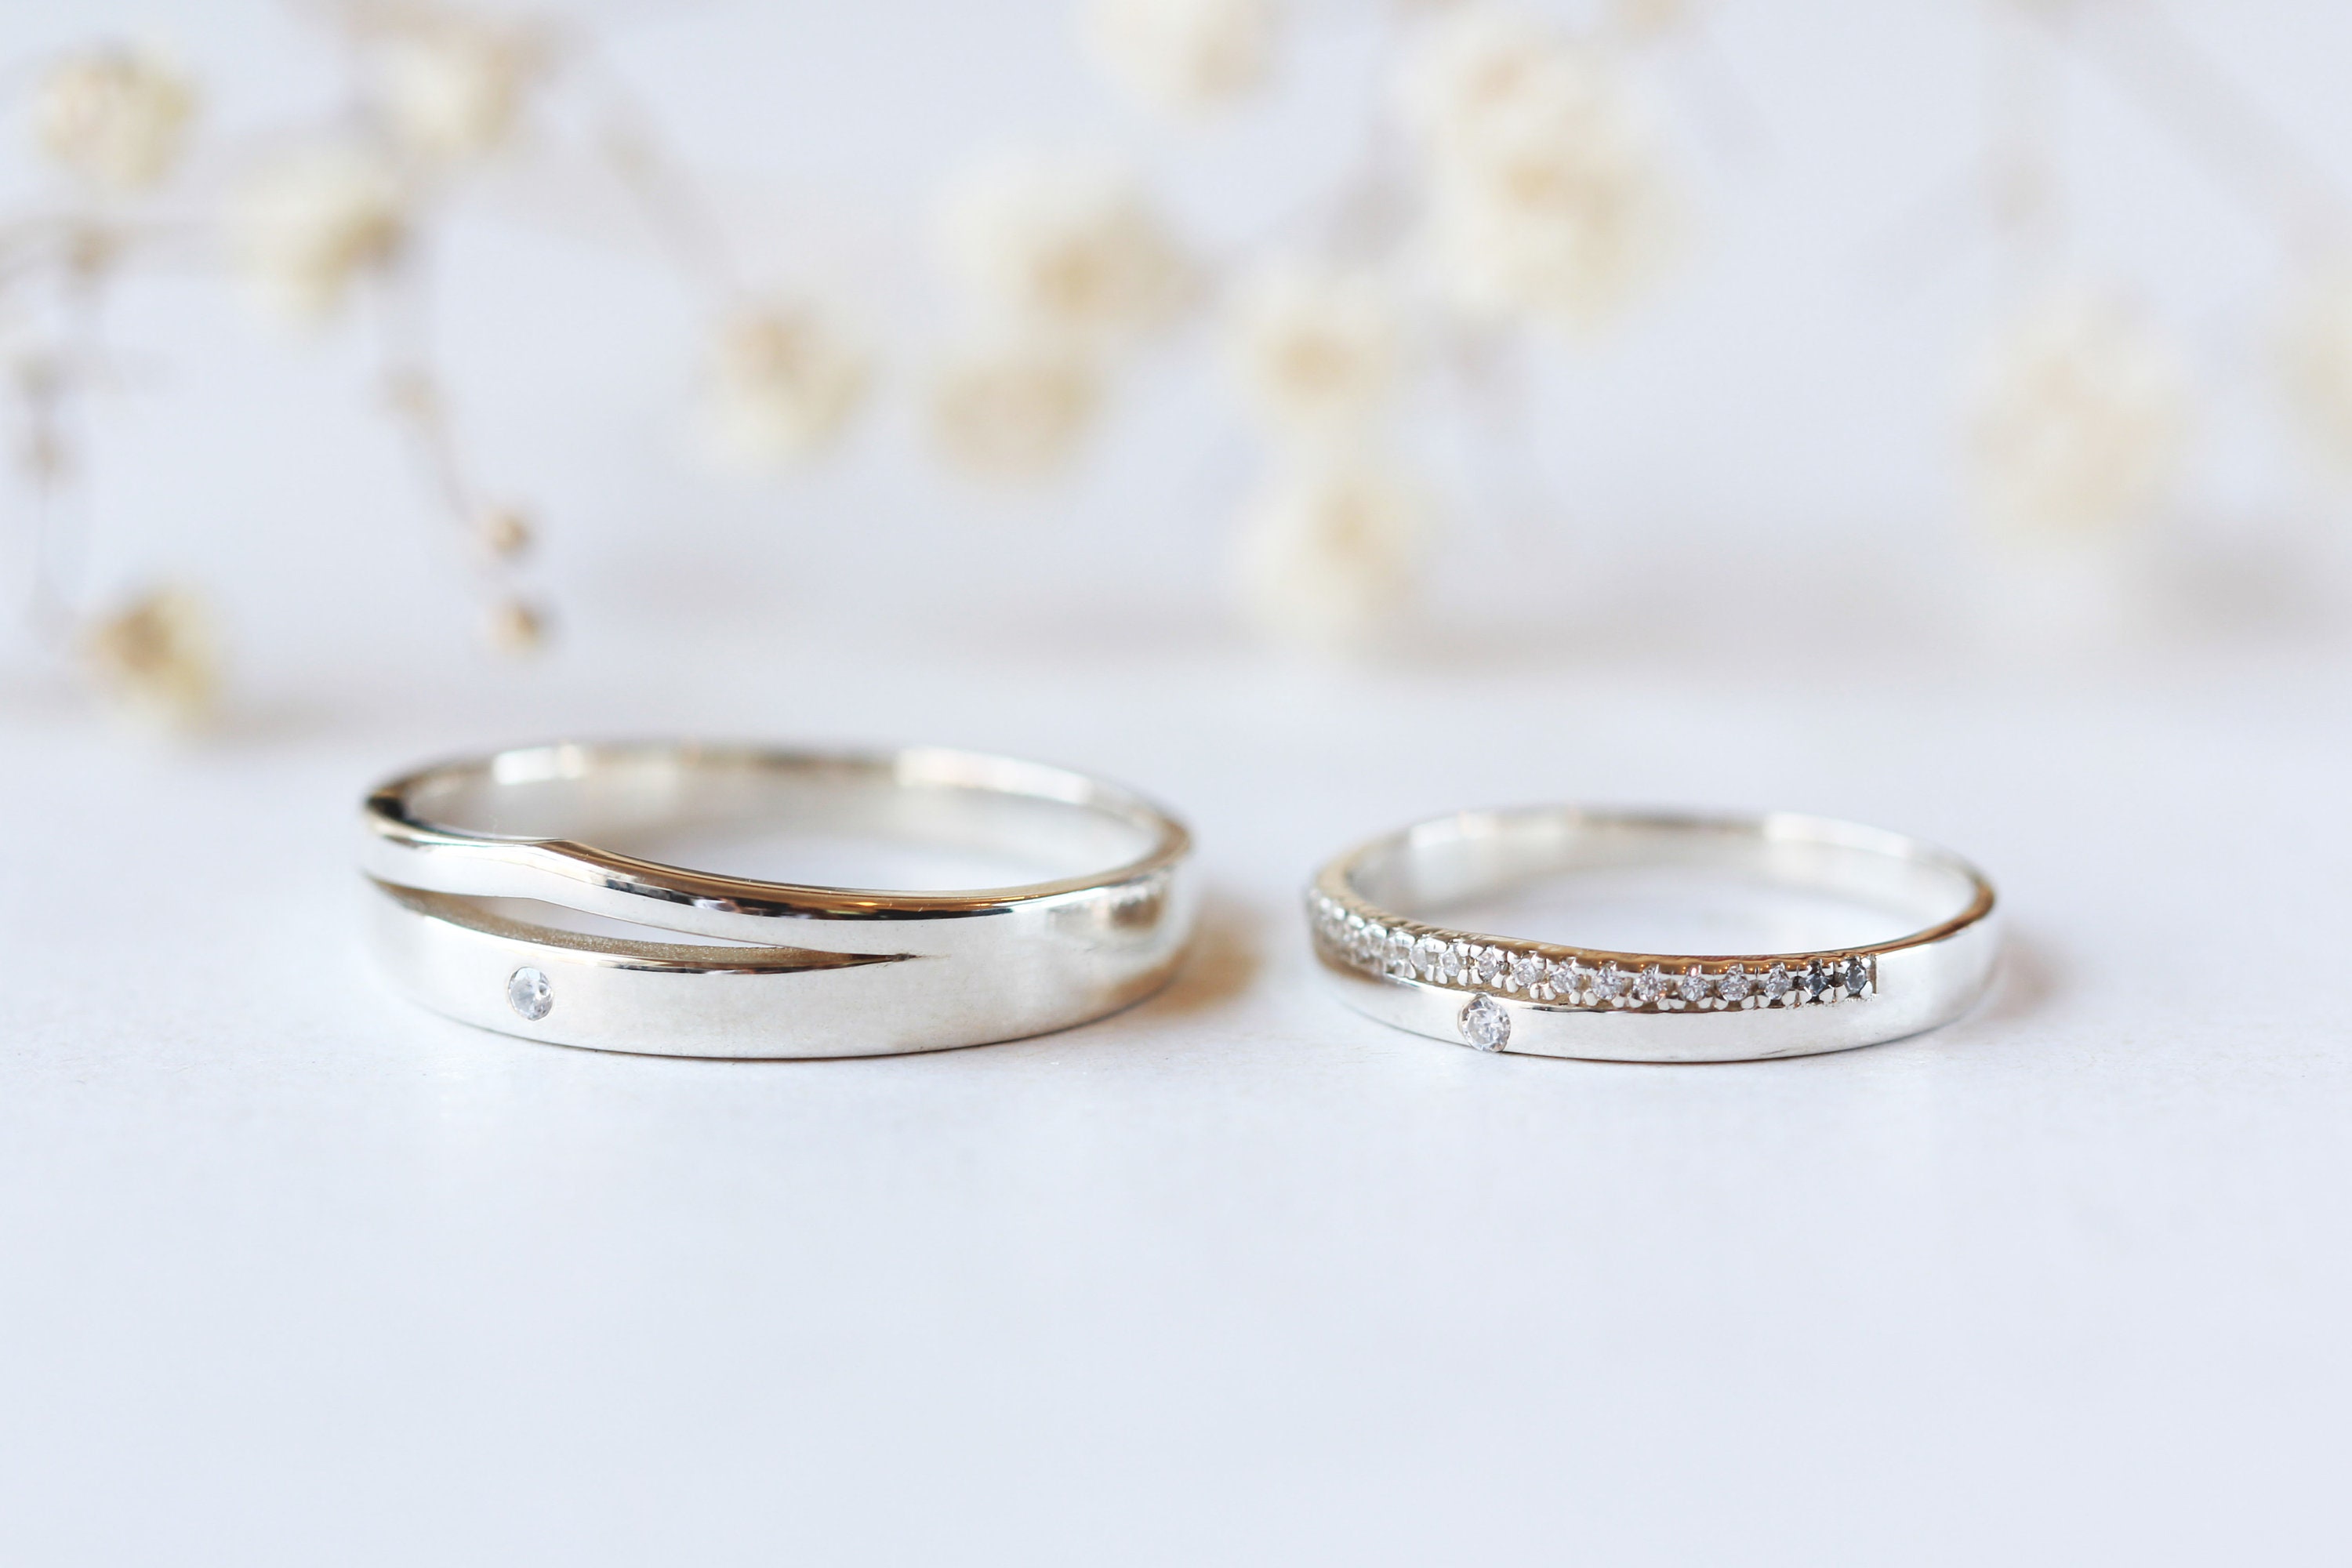 Diamond Wedding Ring / Diamond Engagement Ring / Diamond Solitaire Ring /  Solitaire Diamond 4 Prongs Ring / Thin Diamond Ring / Gift for her